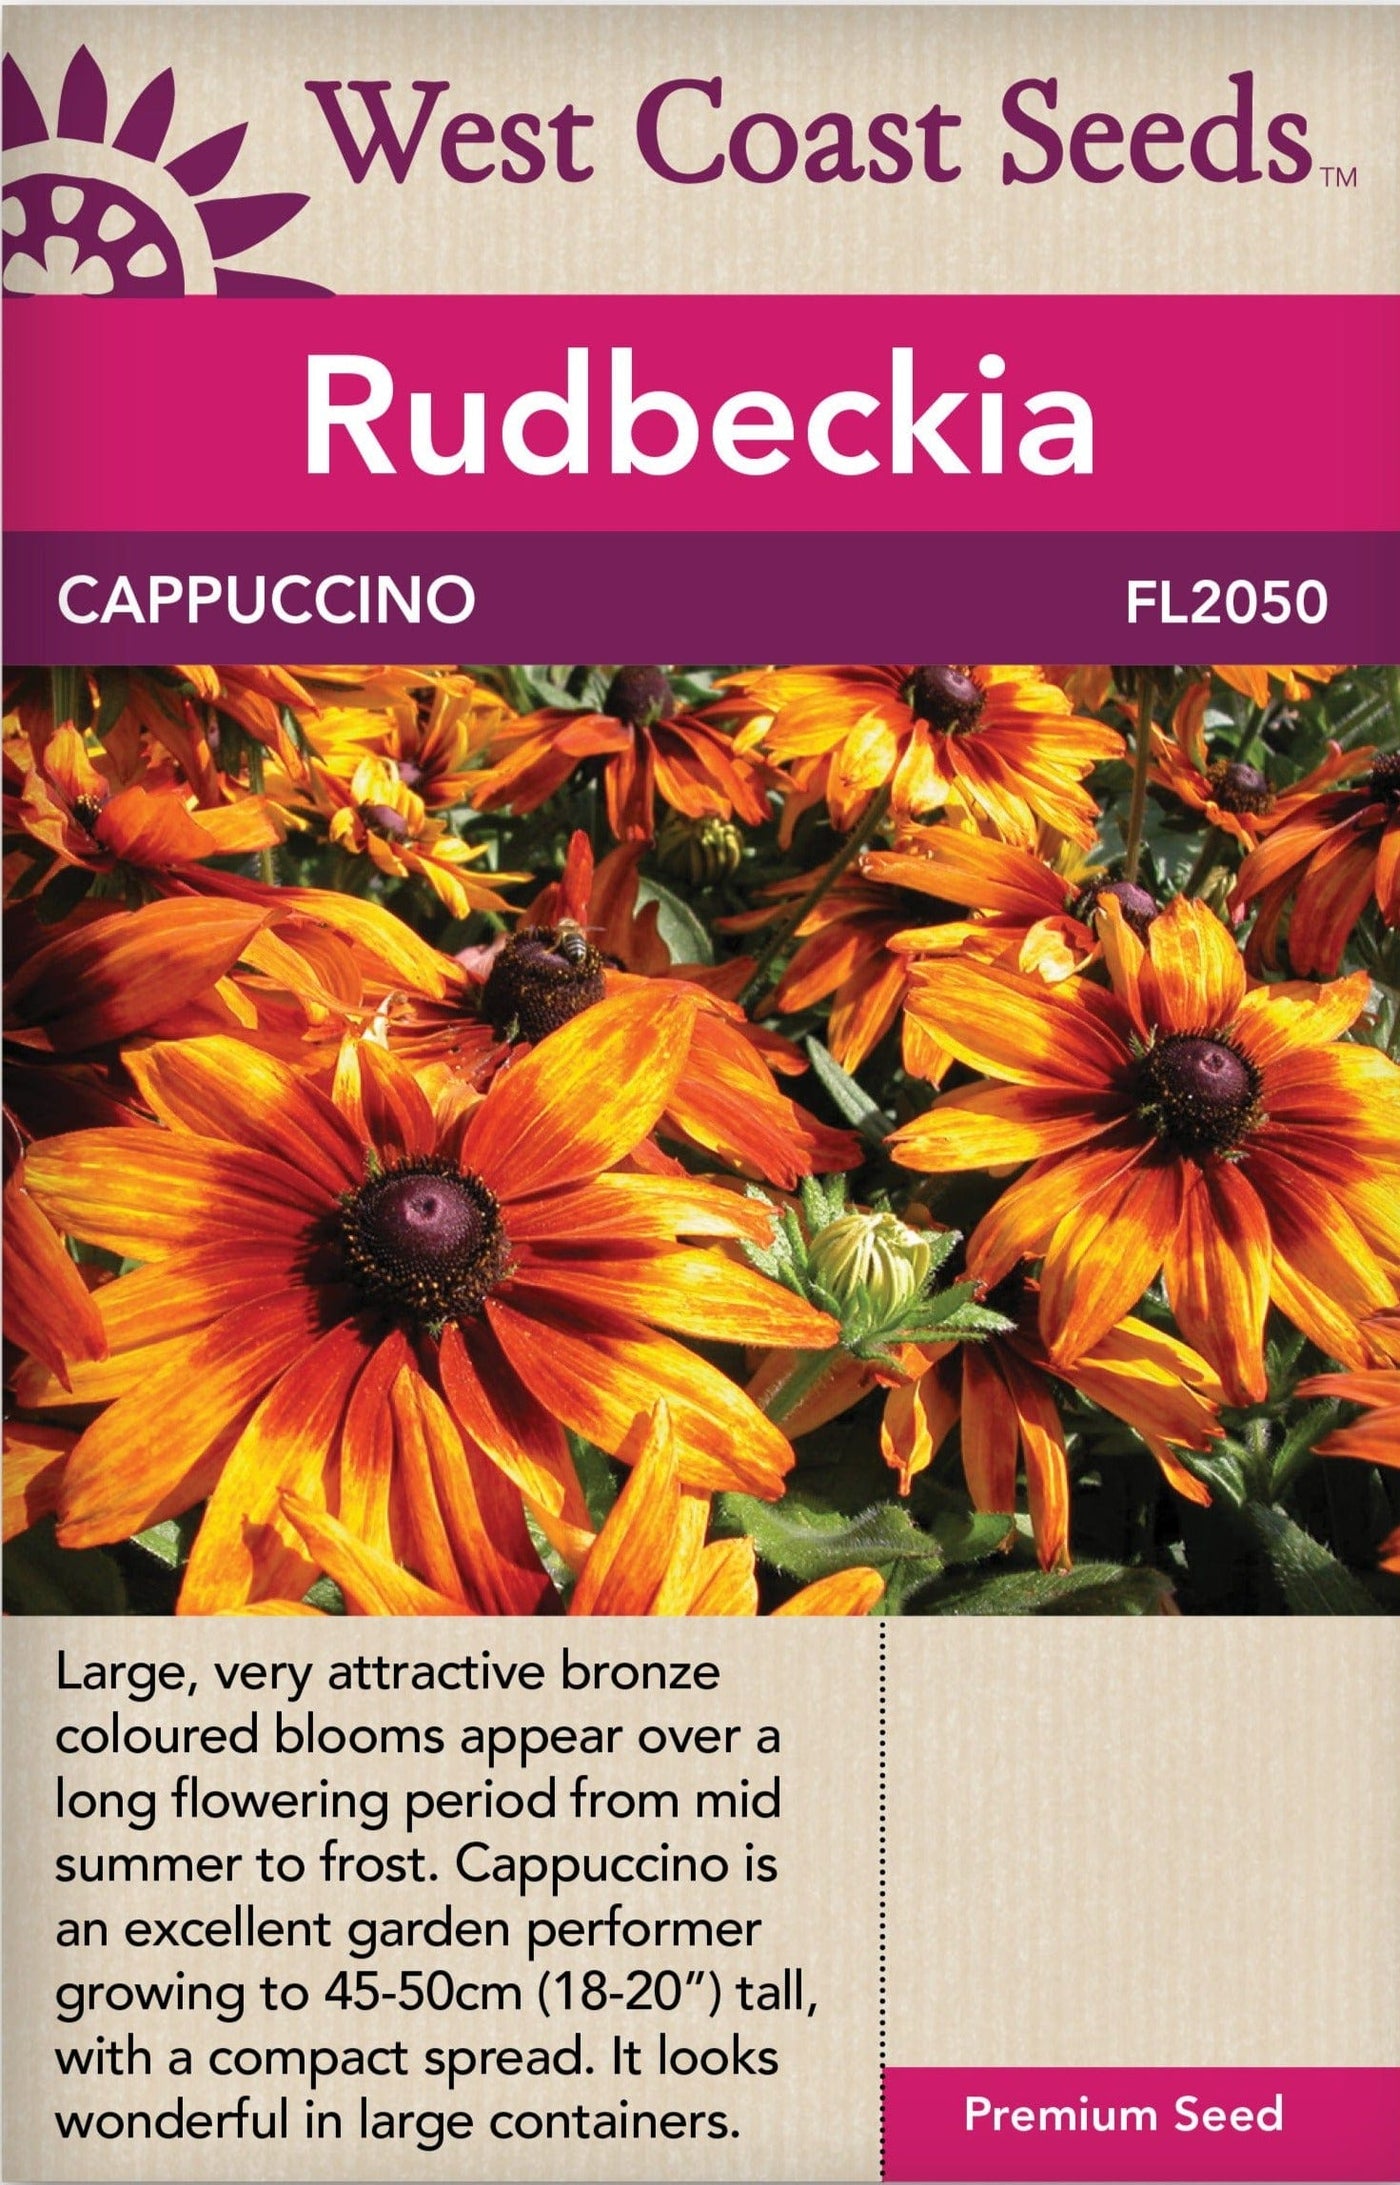 Rudbeckia Cappuccino - West Coast Seeds